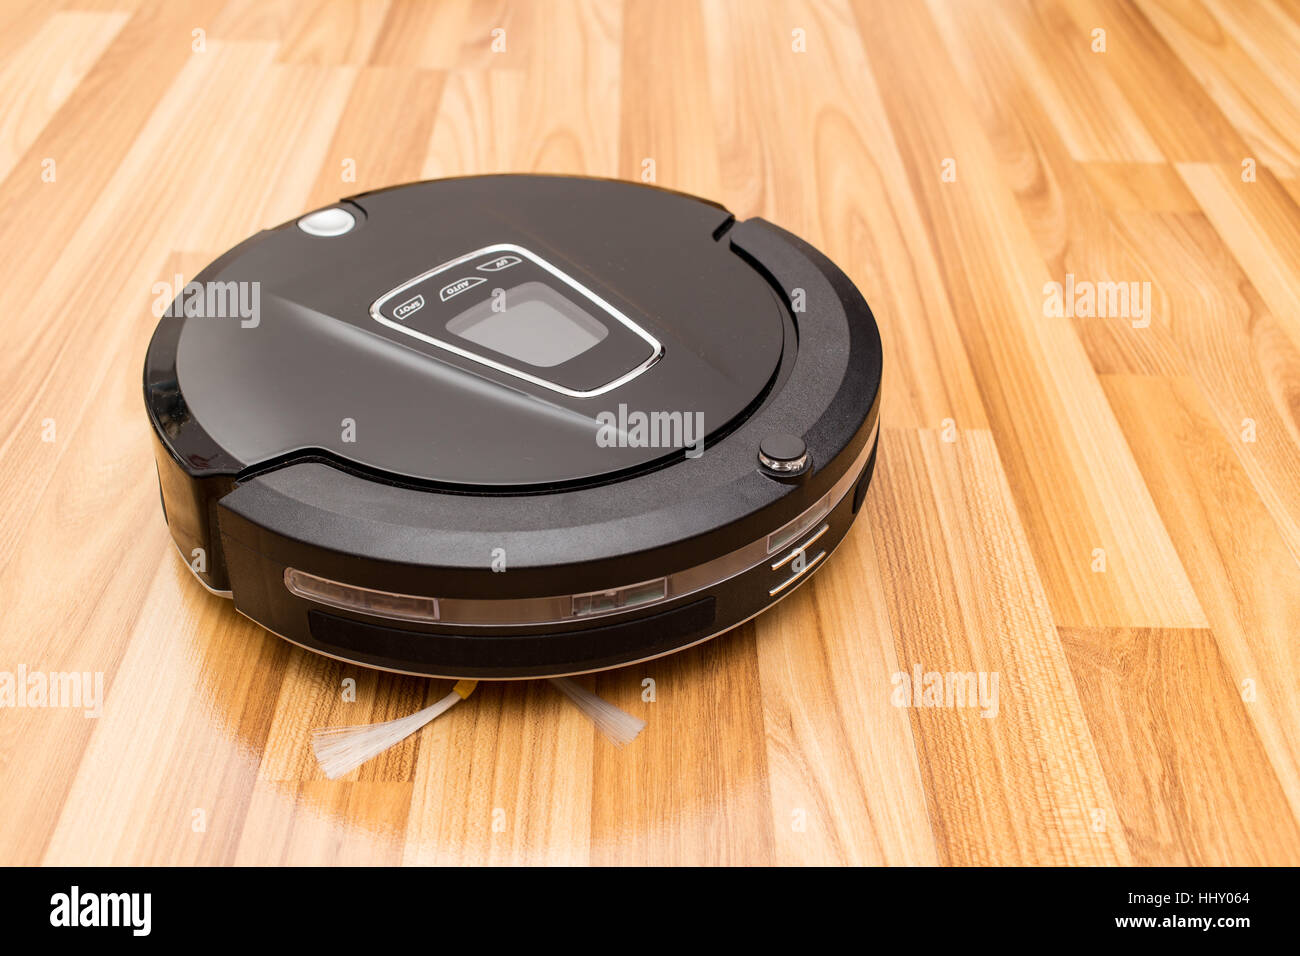 Robotic vacuum cleaner on wood parquet floor, Smart vacuum, new automate technology housework. Stock Photo